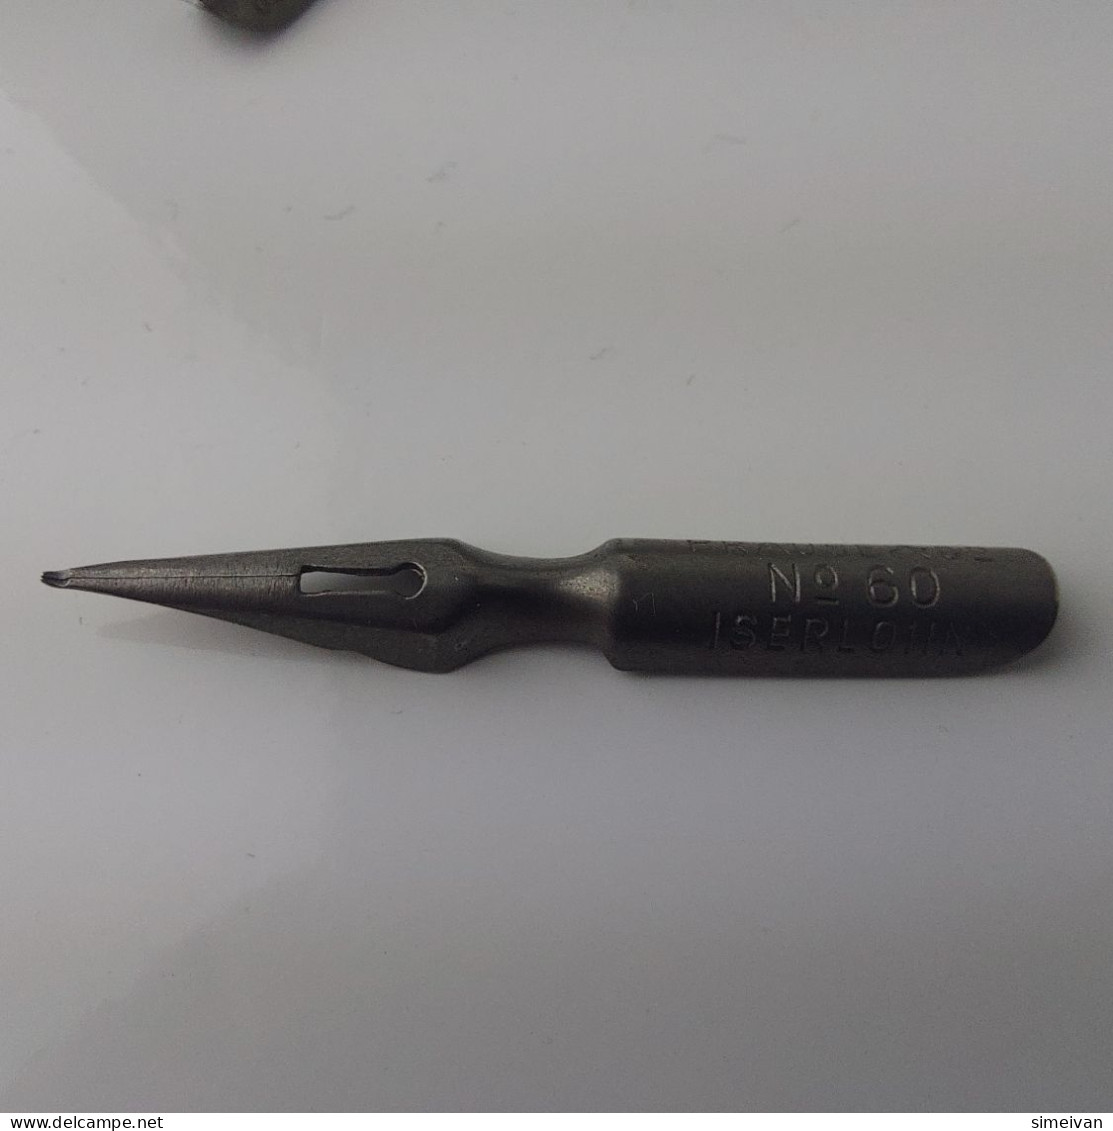 Vintage Dip Pen Nibs BRAUSE & Co No. 60 ISERLOHN Feder 16 Pcs Calligraphy #5563 - Stylos